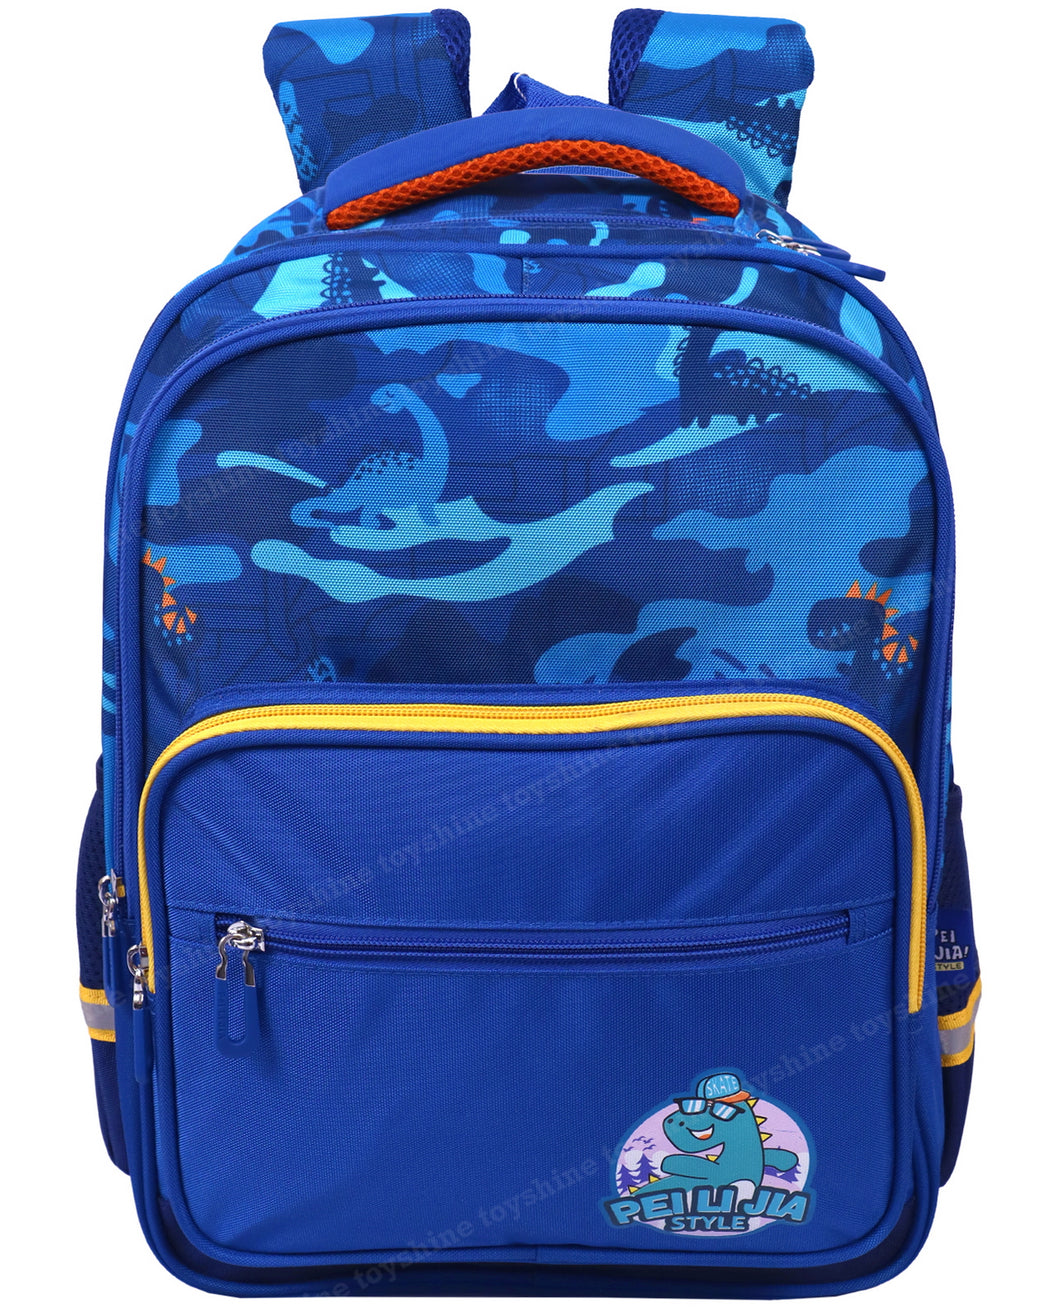 Toyshine Dinosaur High School College Backpacks 16 inches for Teen Girls Boys Lightweight Bag- Blue